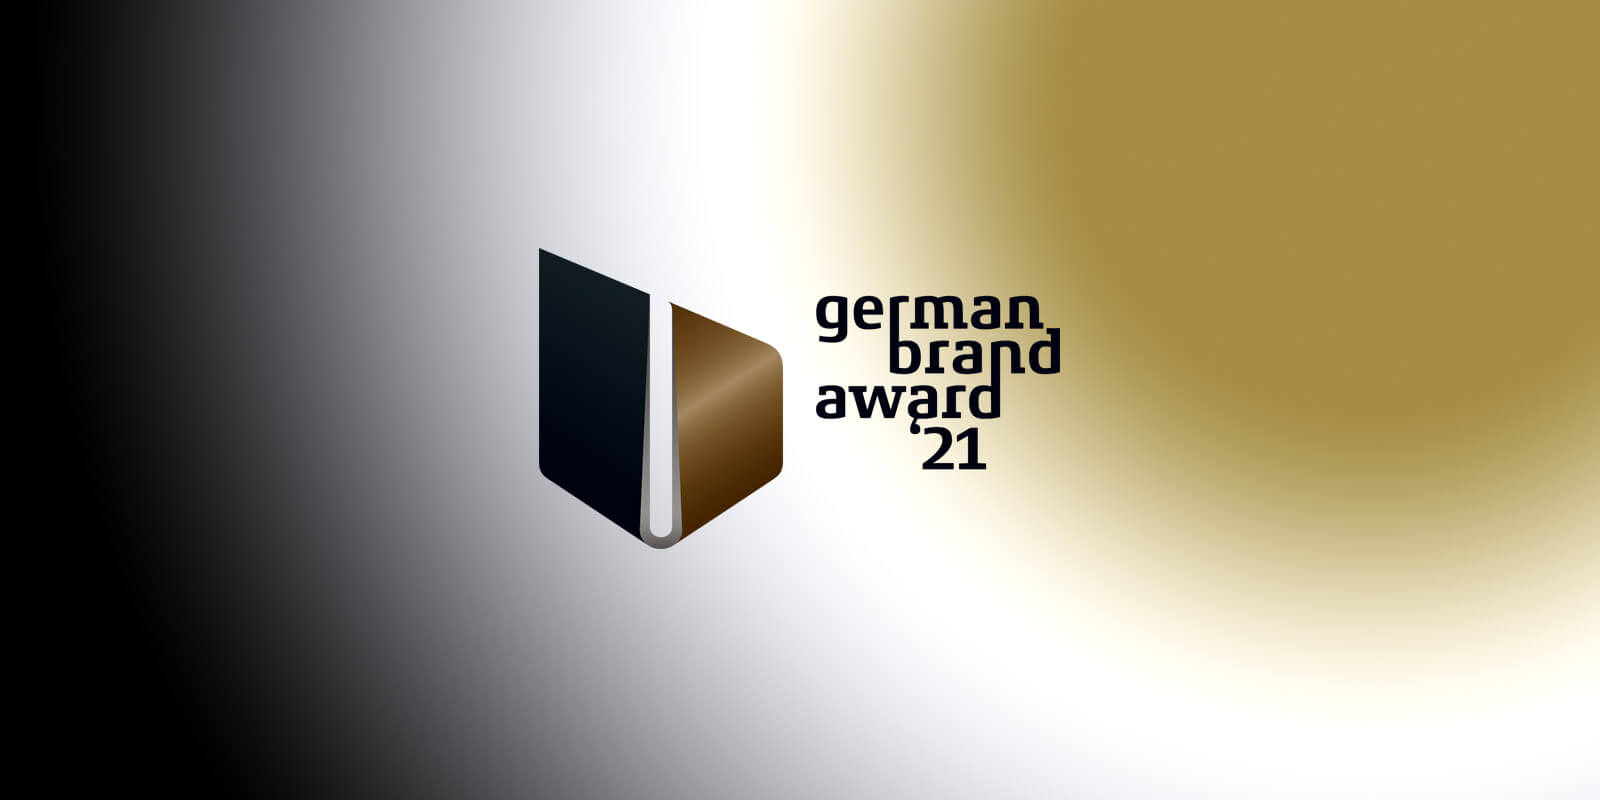 fmk german brand award 2021